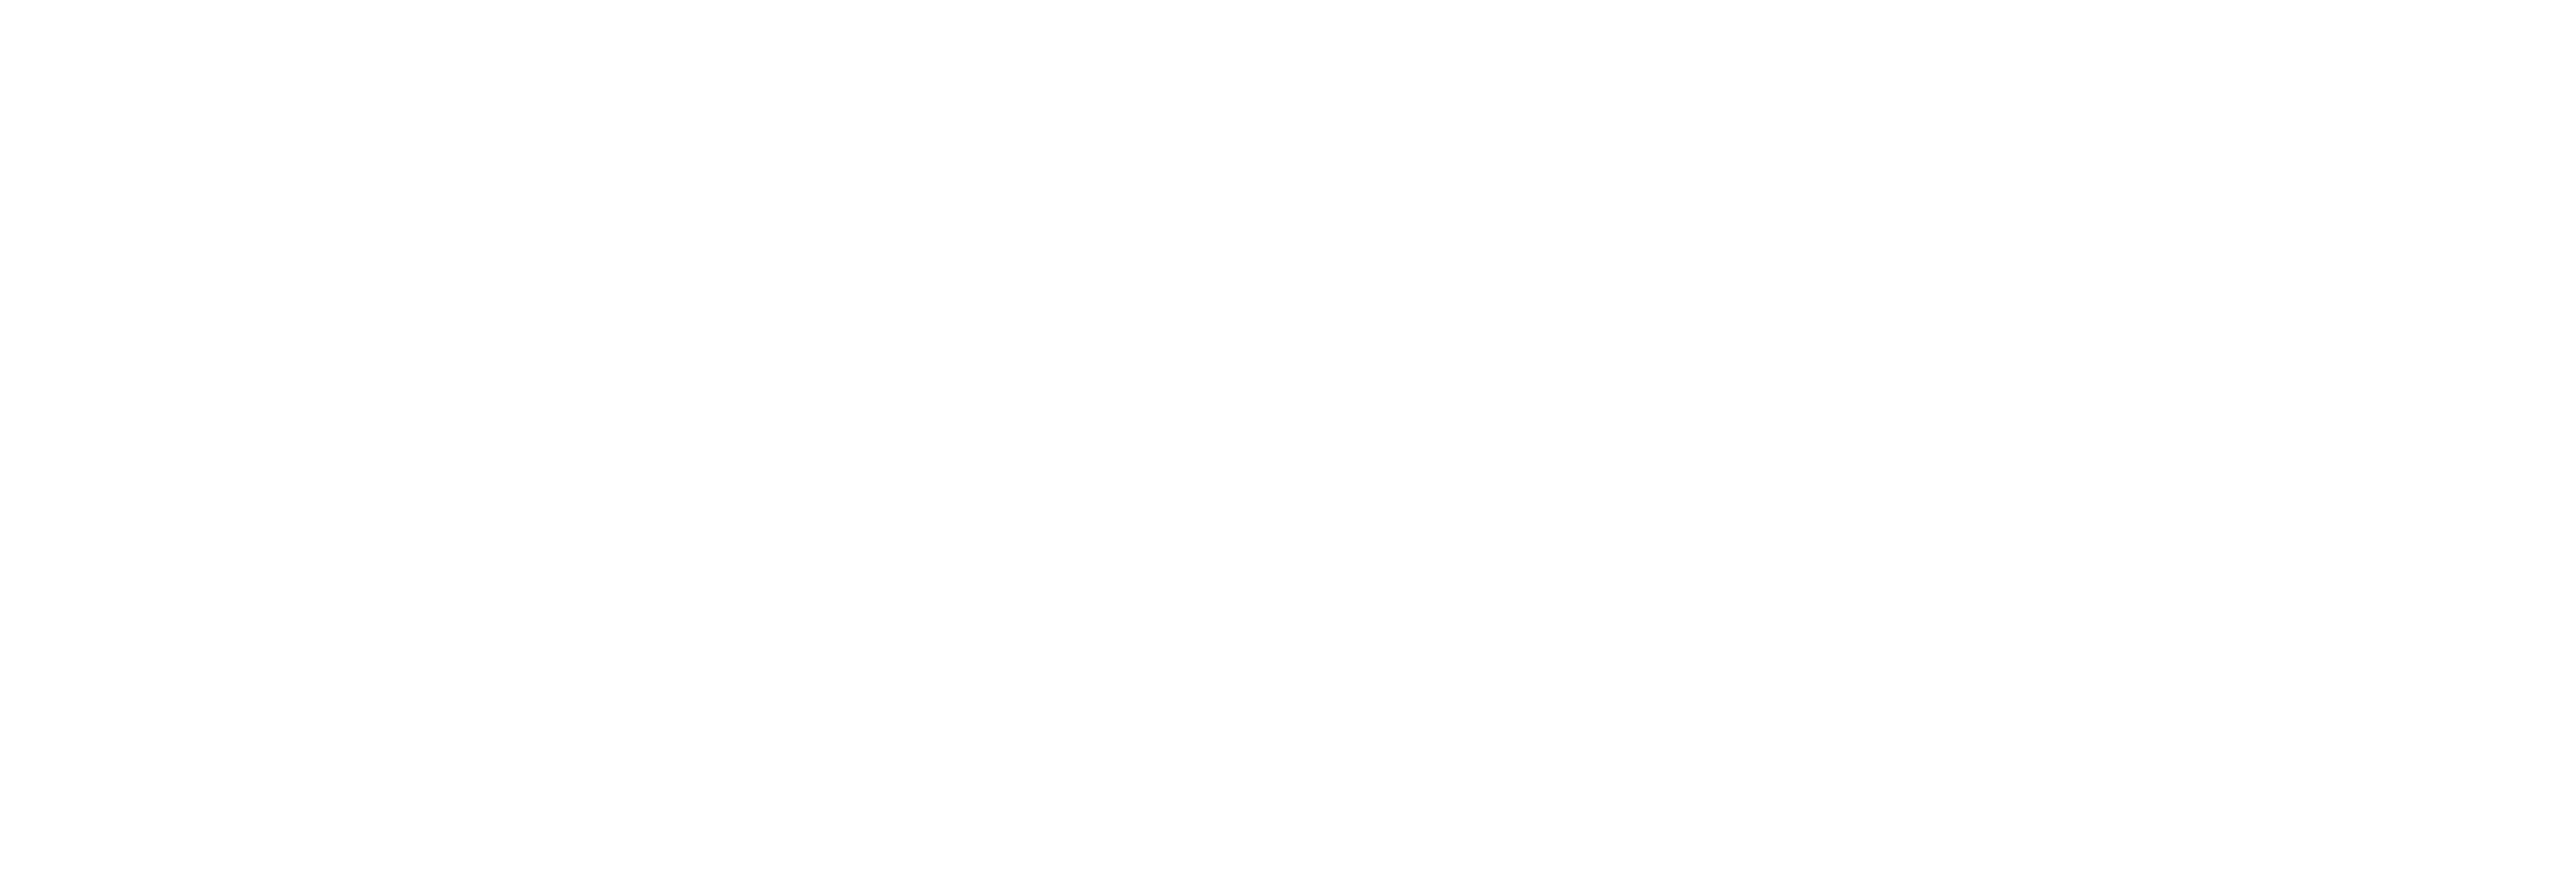 Nights in Rodanthe logo